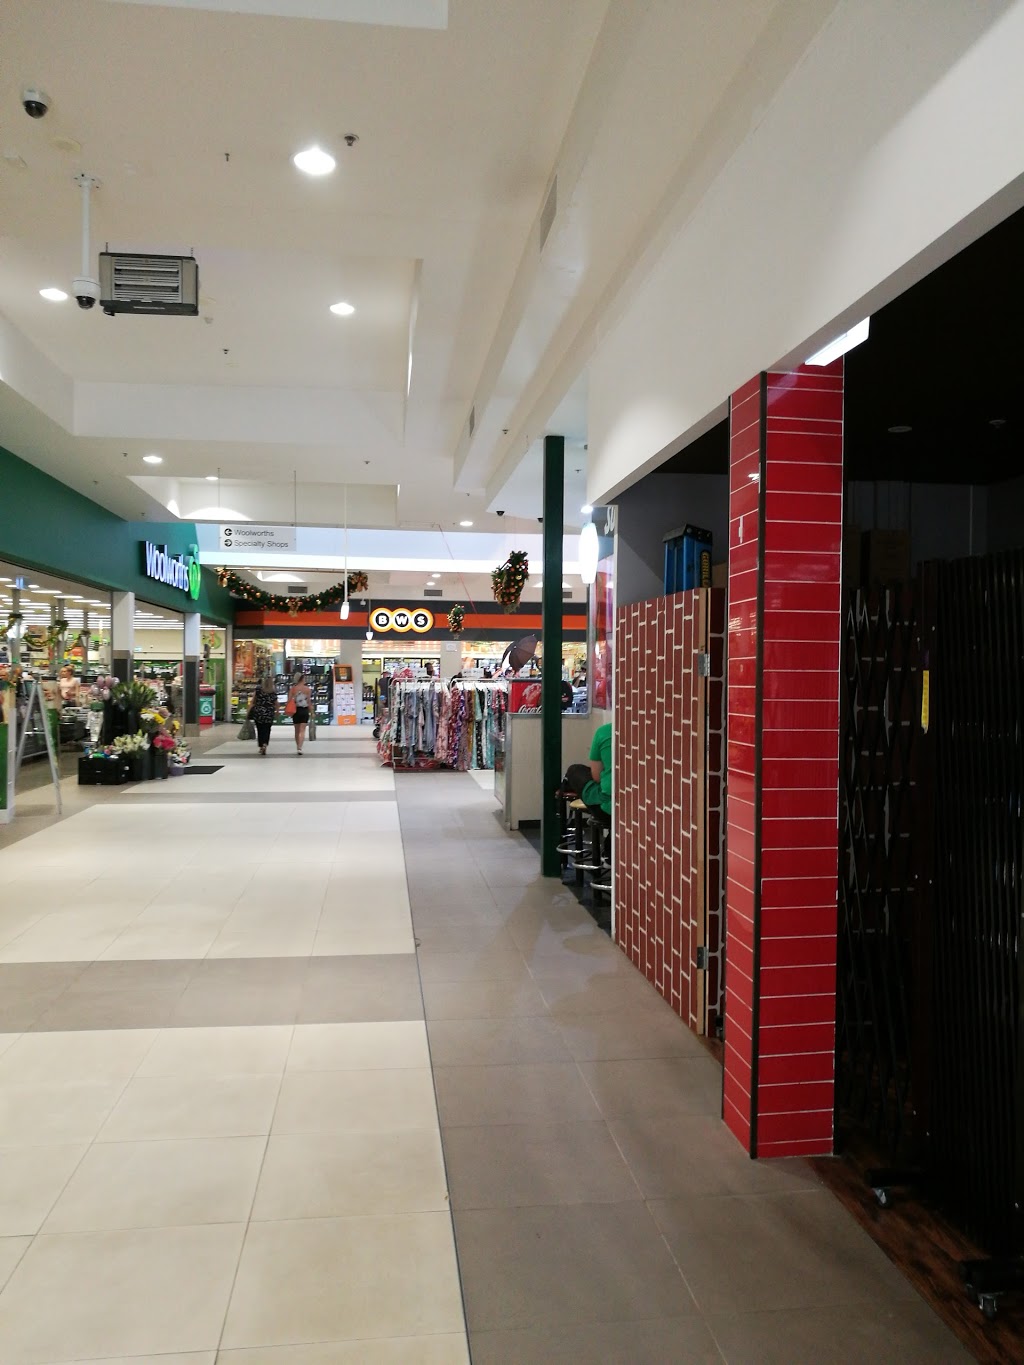 Southlands Shopping Centre South Penrith | shopping mall | 2 Birmingham Rd, South Penrith NSW 2750, Australia | 0247259166 OR +61 2 4725 9166